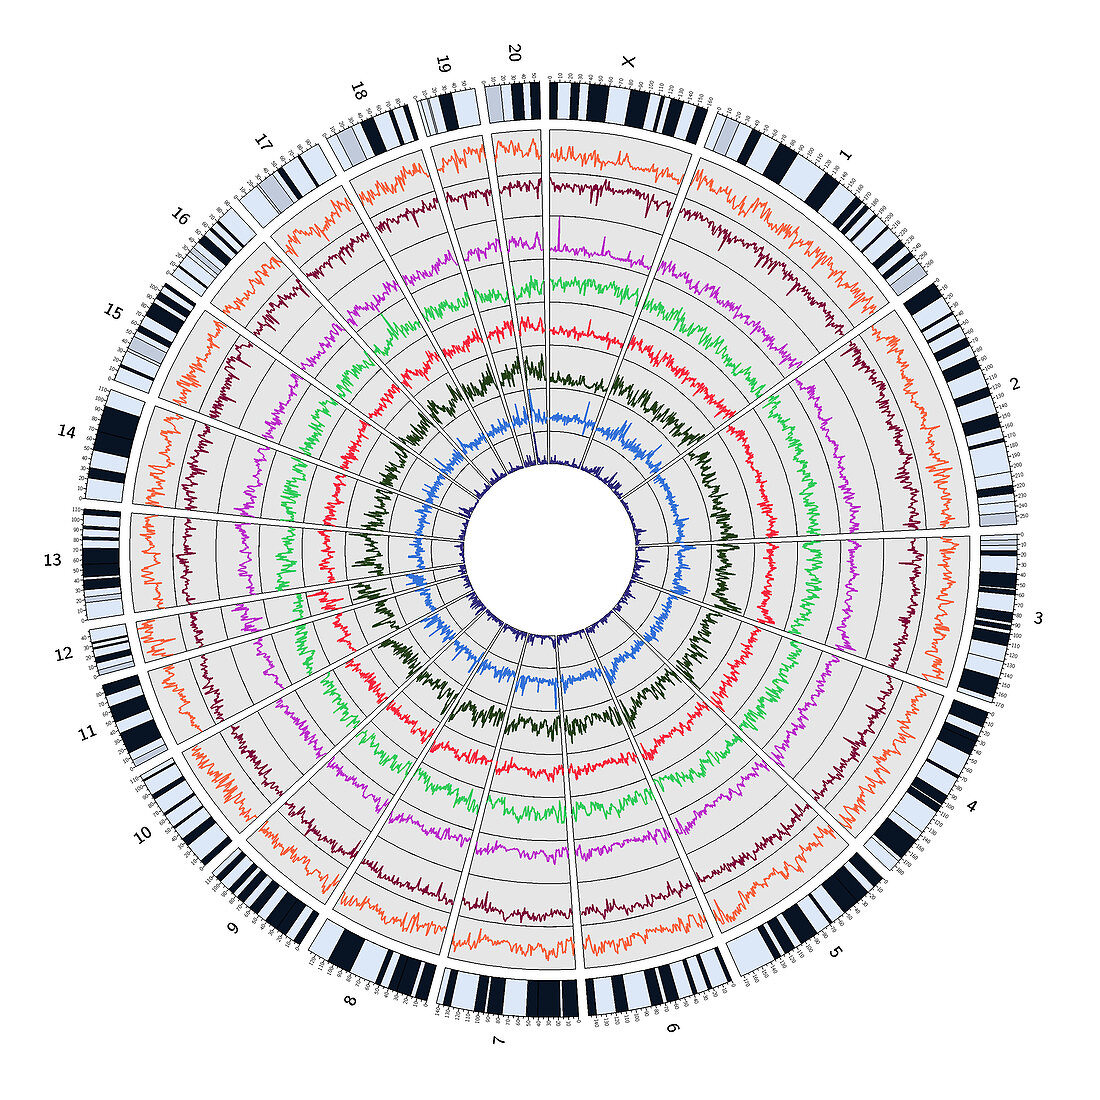 Circos, Circular Genome Map, Rat